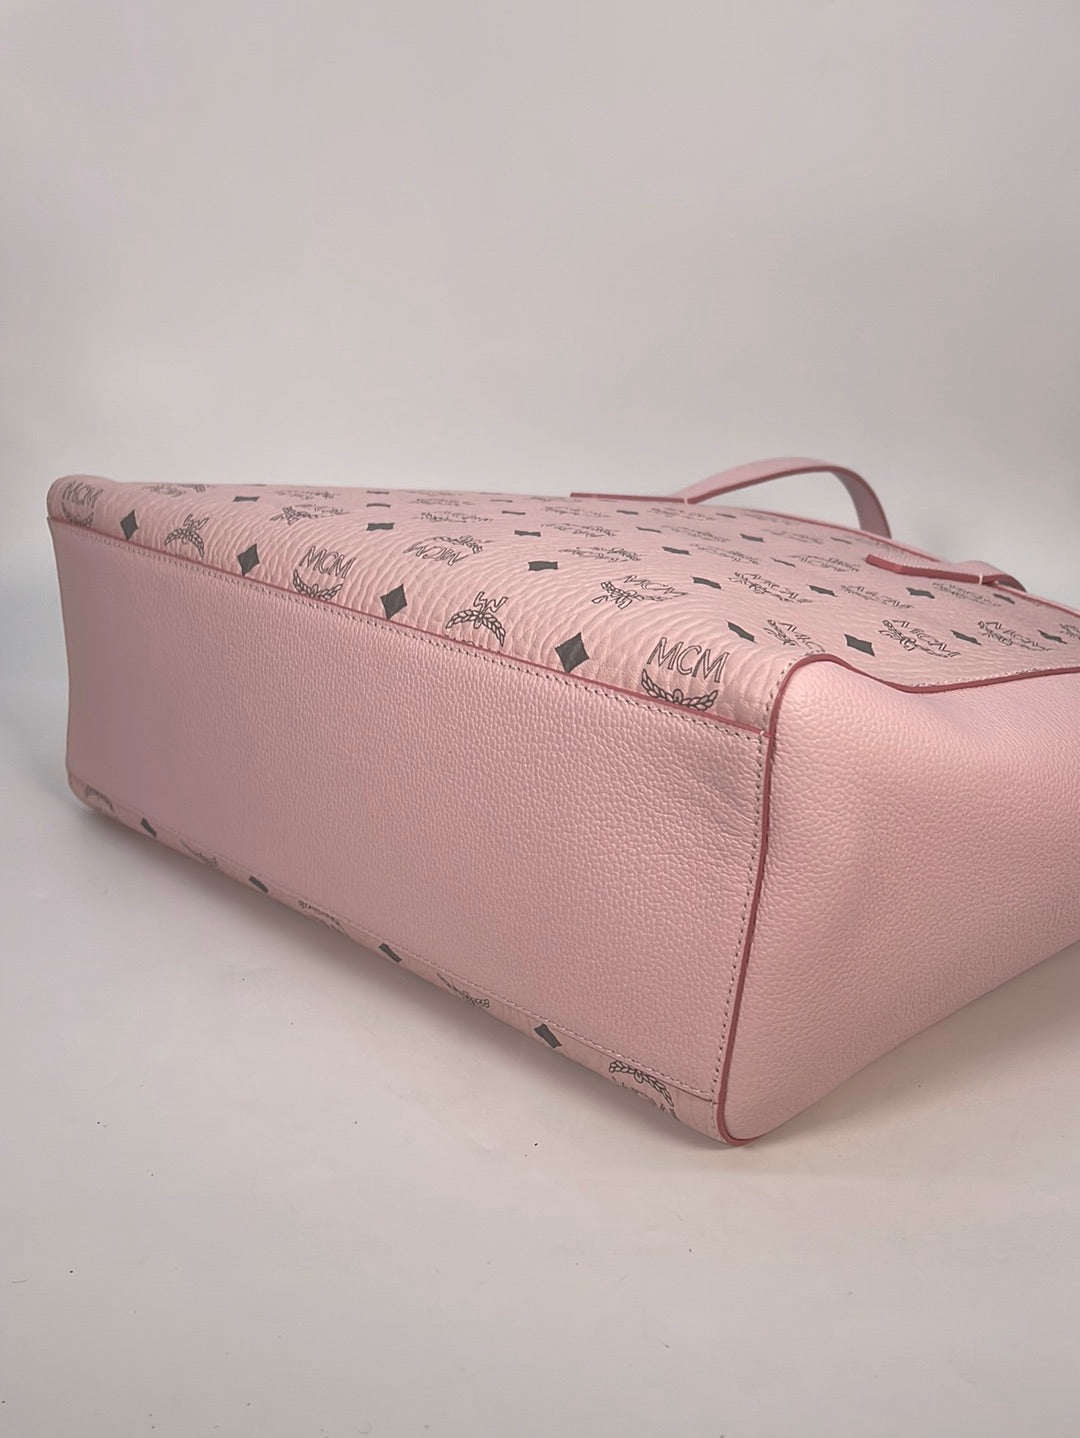 PRELOVED MCM Visetos Pink Leather Shopping Tote Bag 6RMHC9W 030723. ** –  KimmieBBags LLC